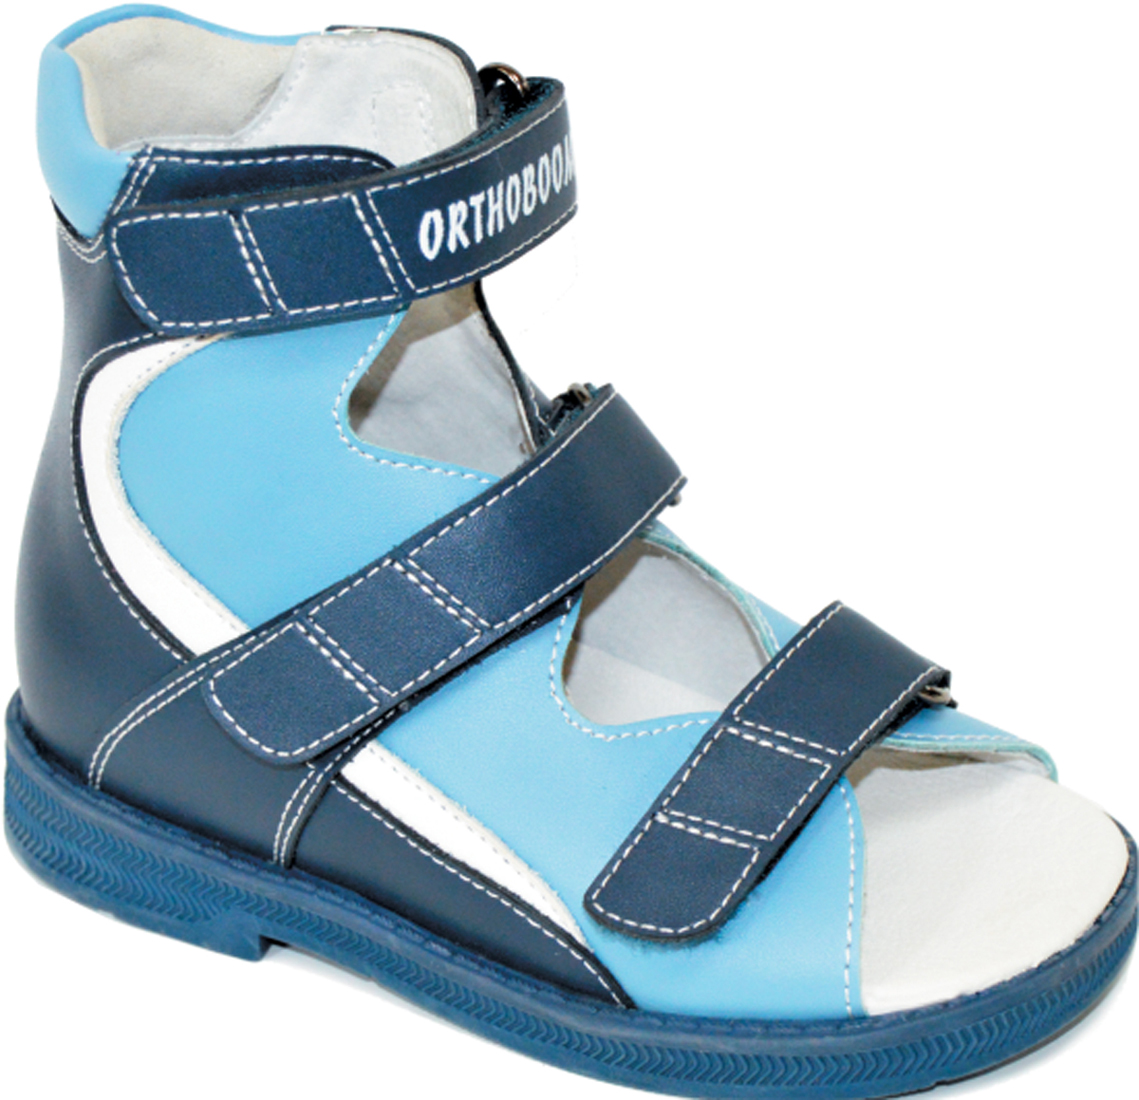 Сандалии для мальчика Orthoboom, цвет: темно-синий-голубой-белый. 71597-33. Размер 22